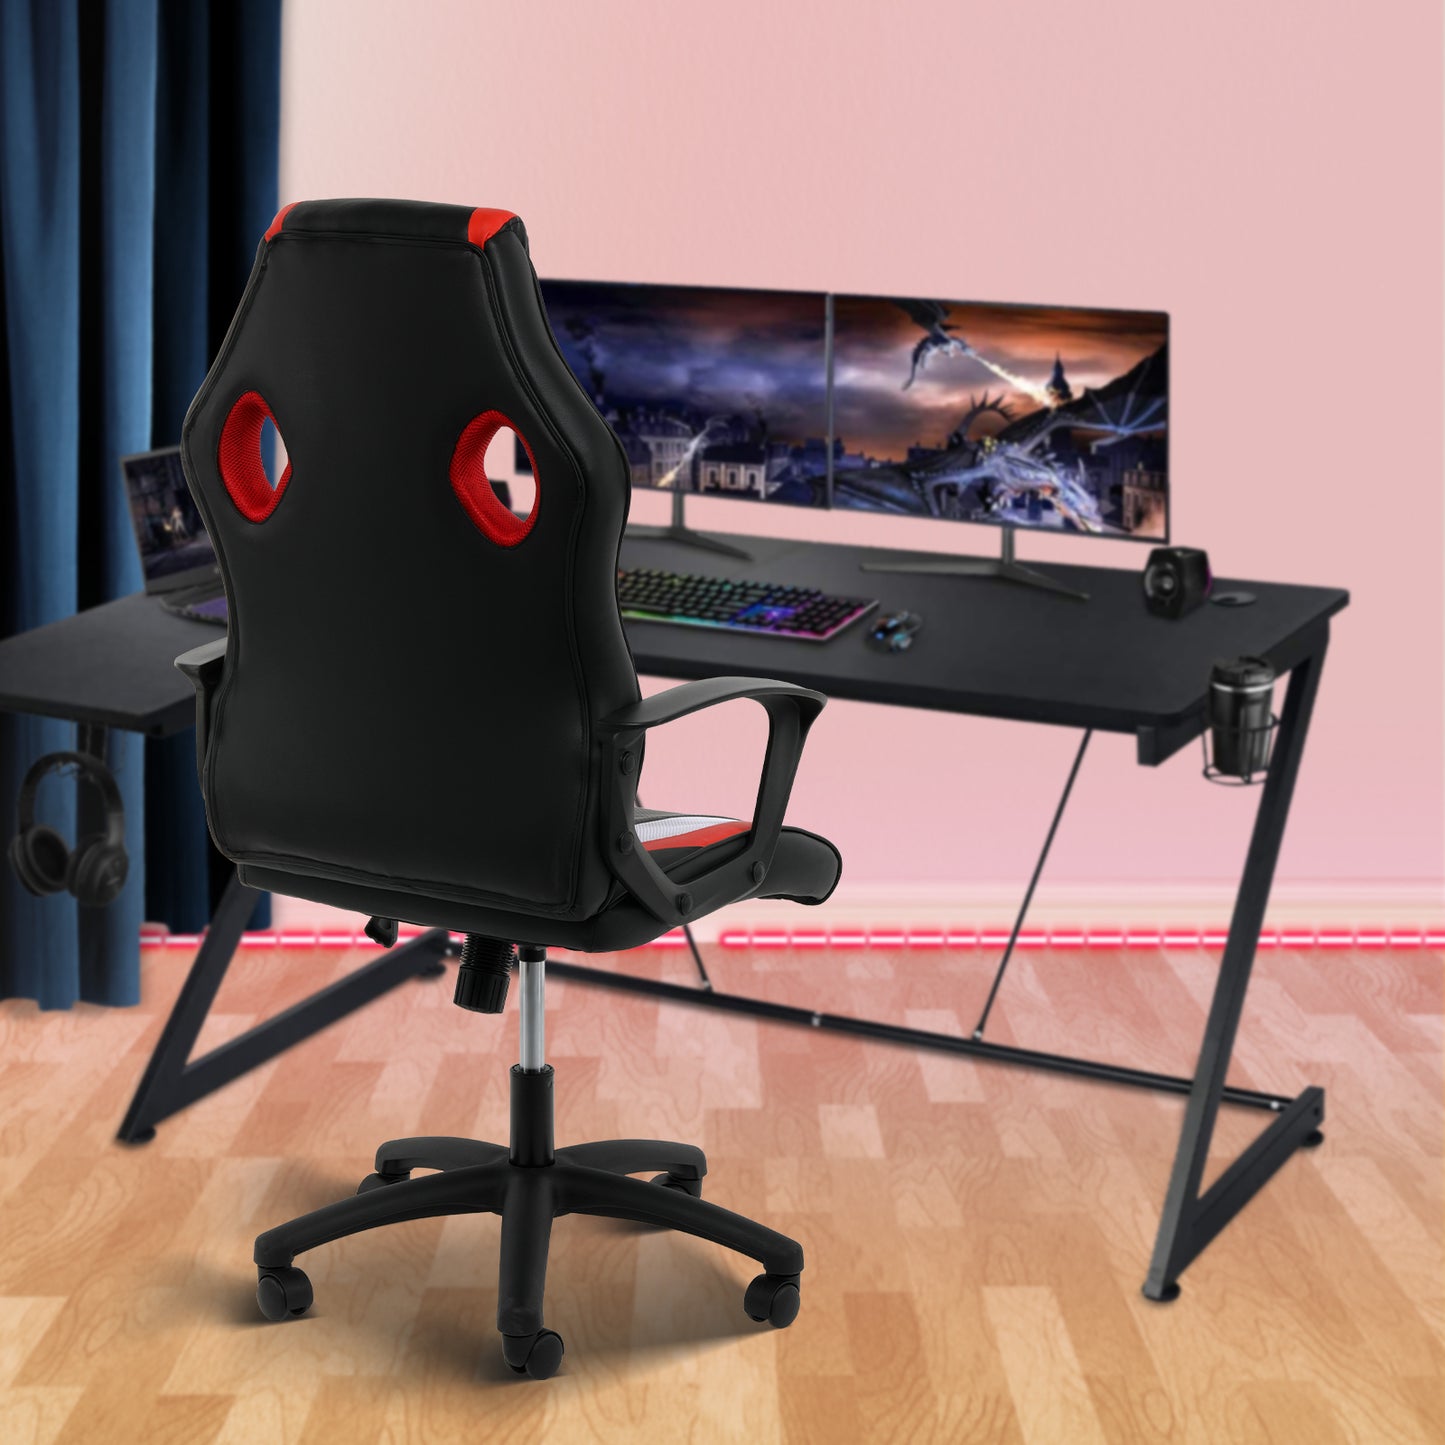 YSSOA Gaming Office High Back Computer Ergonomic Adjustable Swivel Chair, Black/Red/White